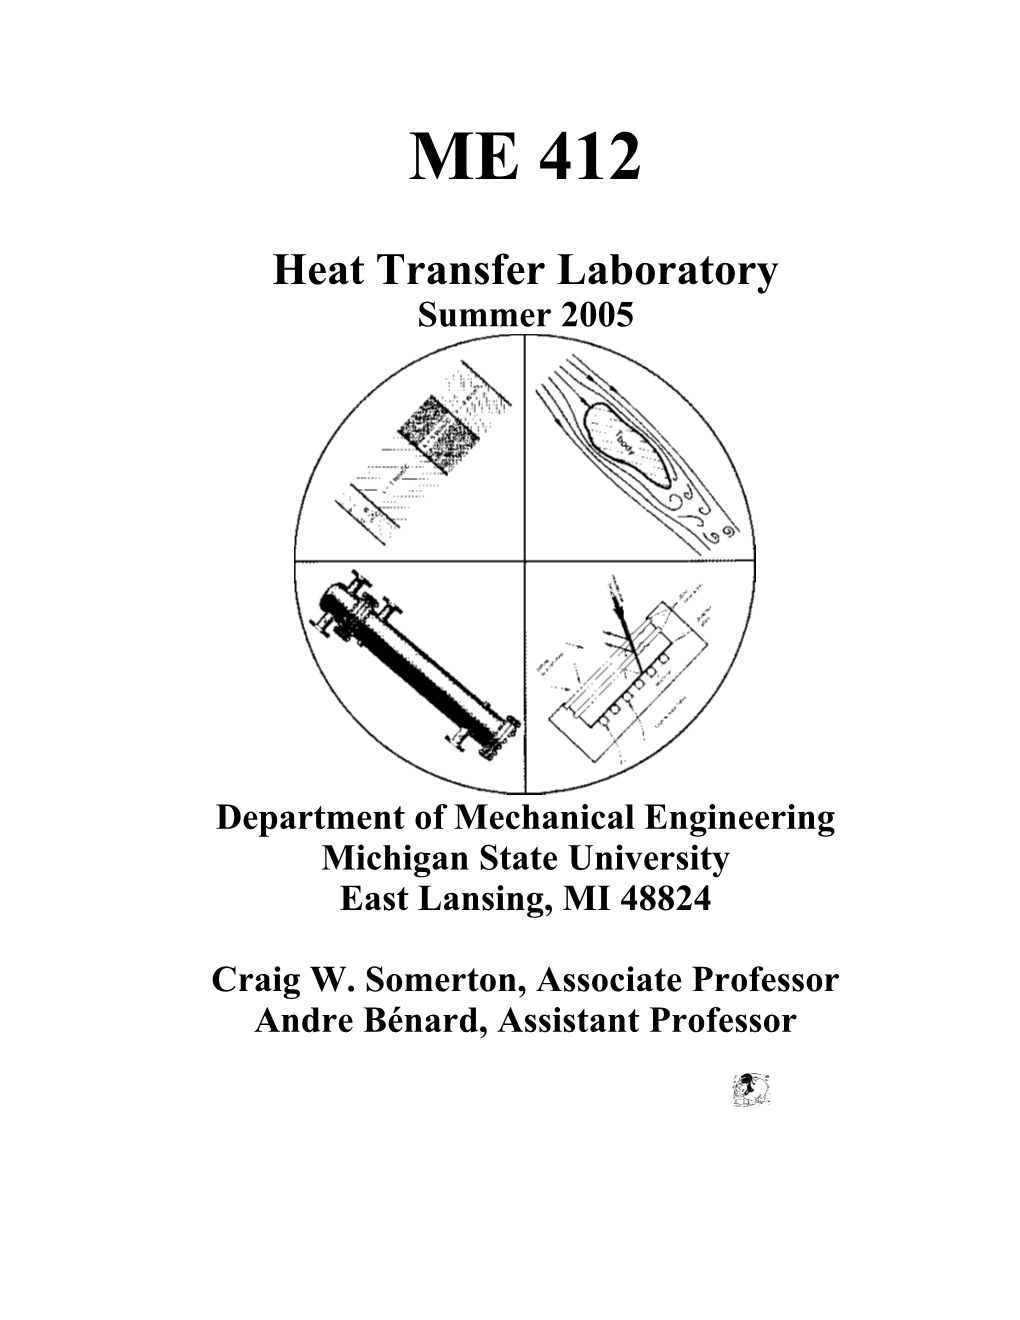 ME 412 Heat Transfer Laboratorysummer 2005